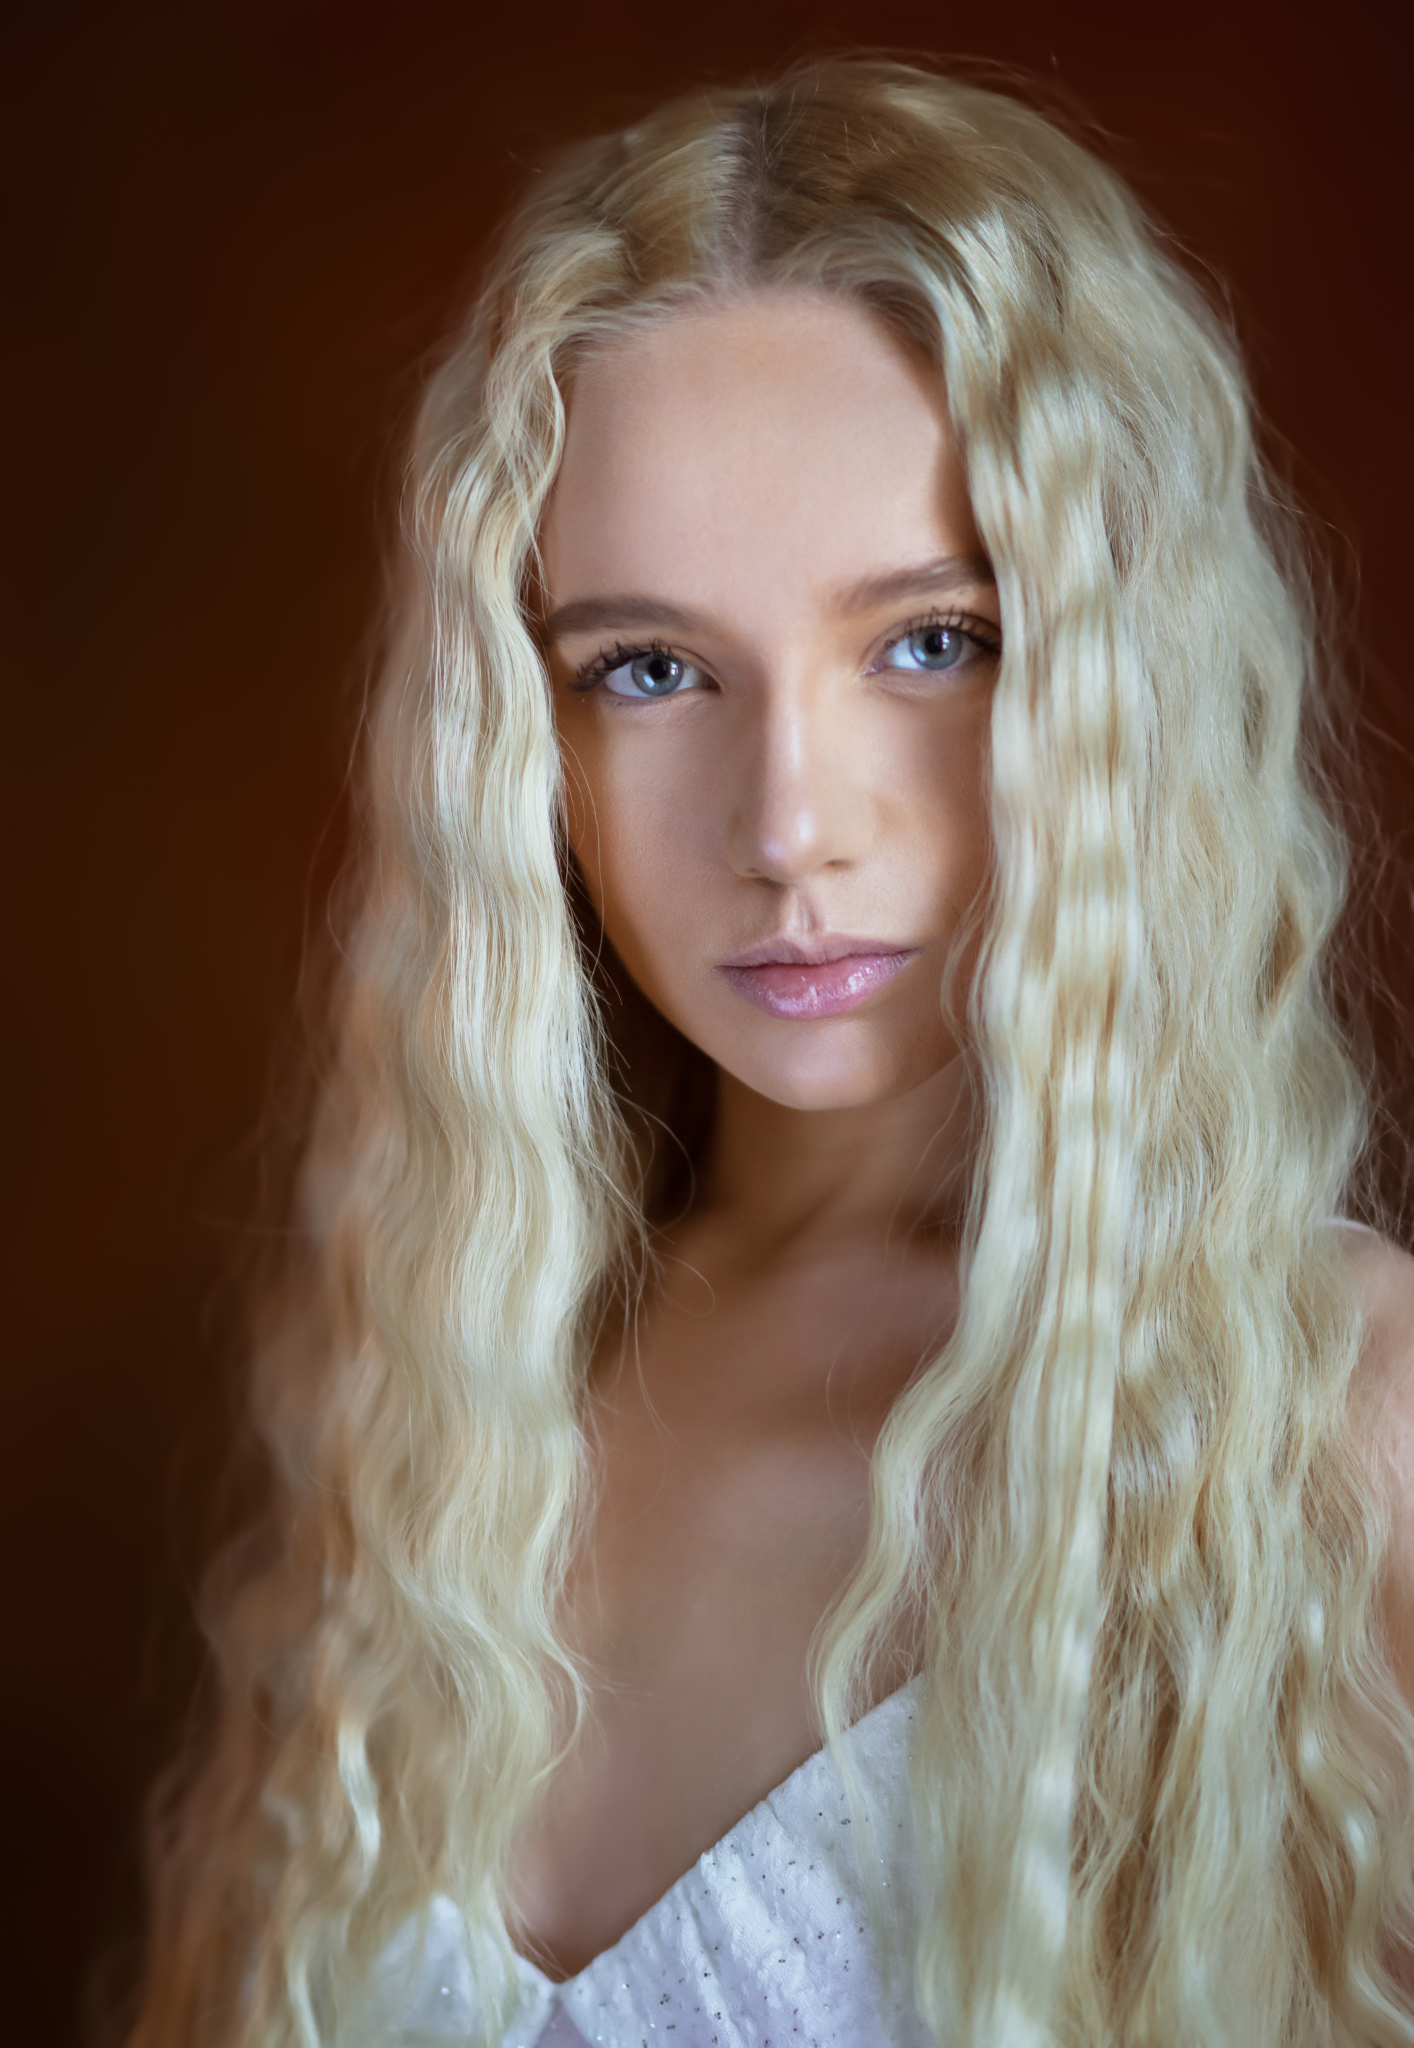 People 1414x2048 Maxim Maximov women Maria Popova blonde wavy hair white clothing simple background portrait model